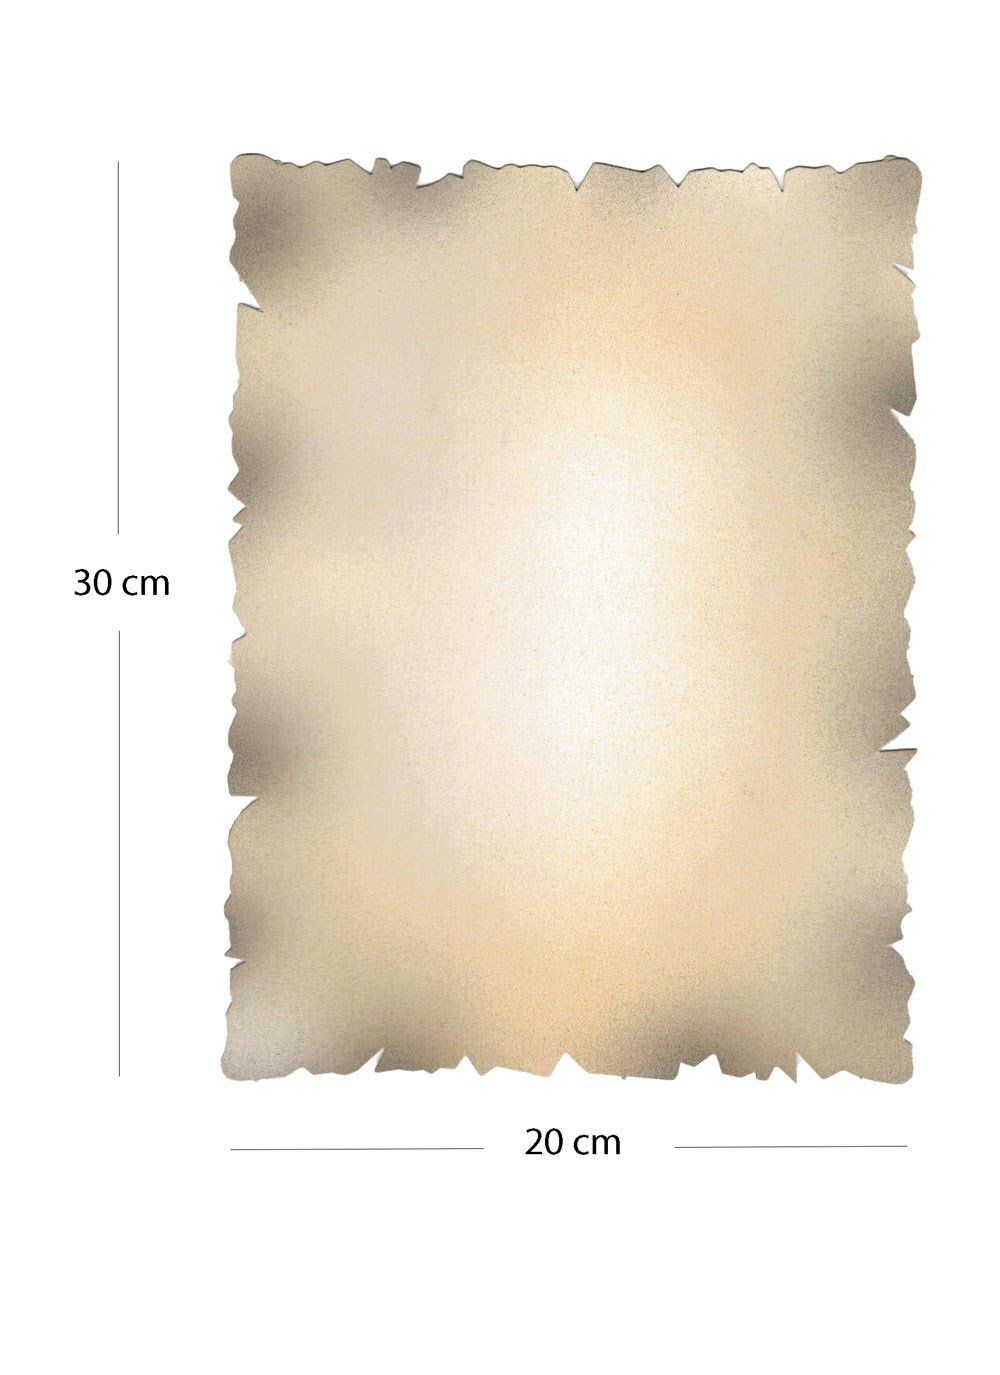 Tezhip ve Minyatür Kağıdı Krem Rengi, Muhallebi (Nişasta) AharlıDikdörtgen 30-20 cm